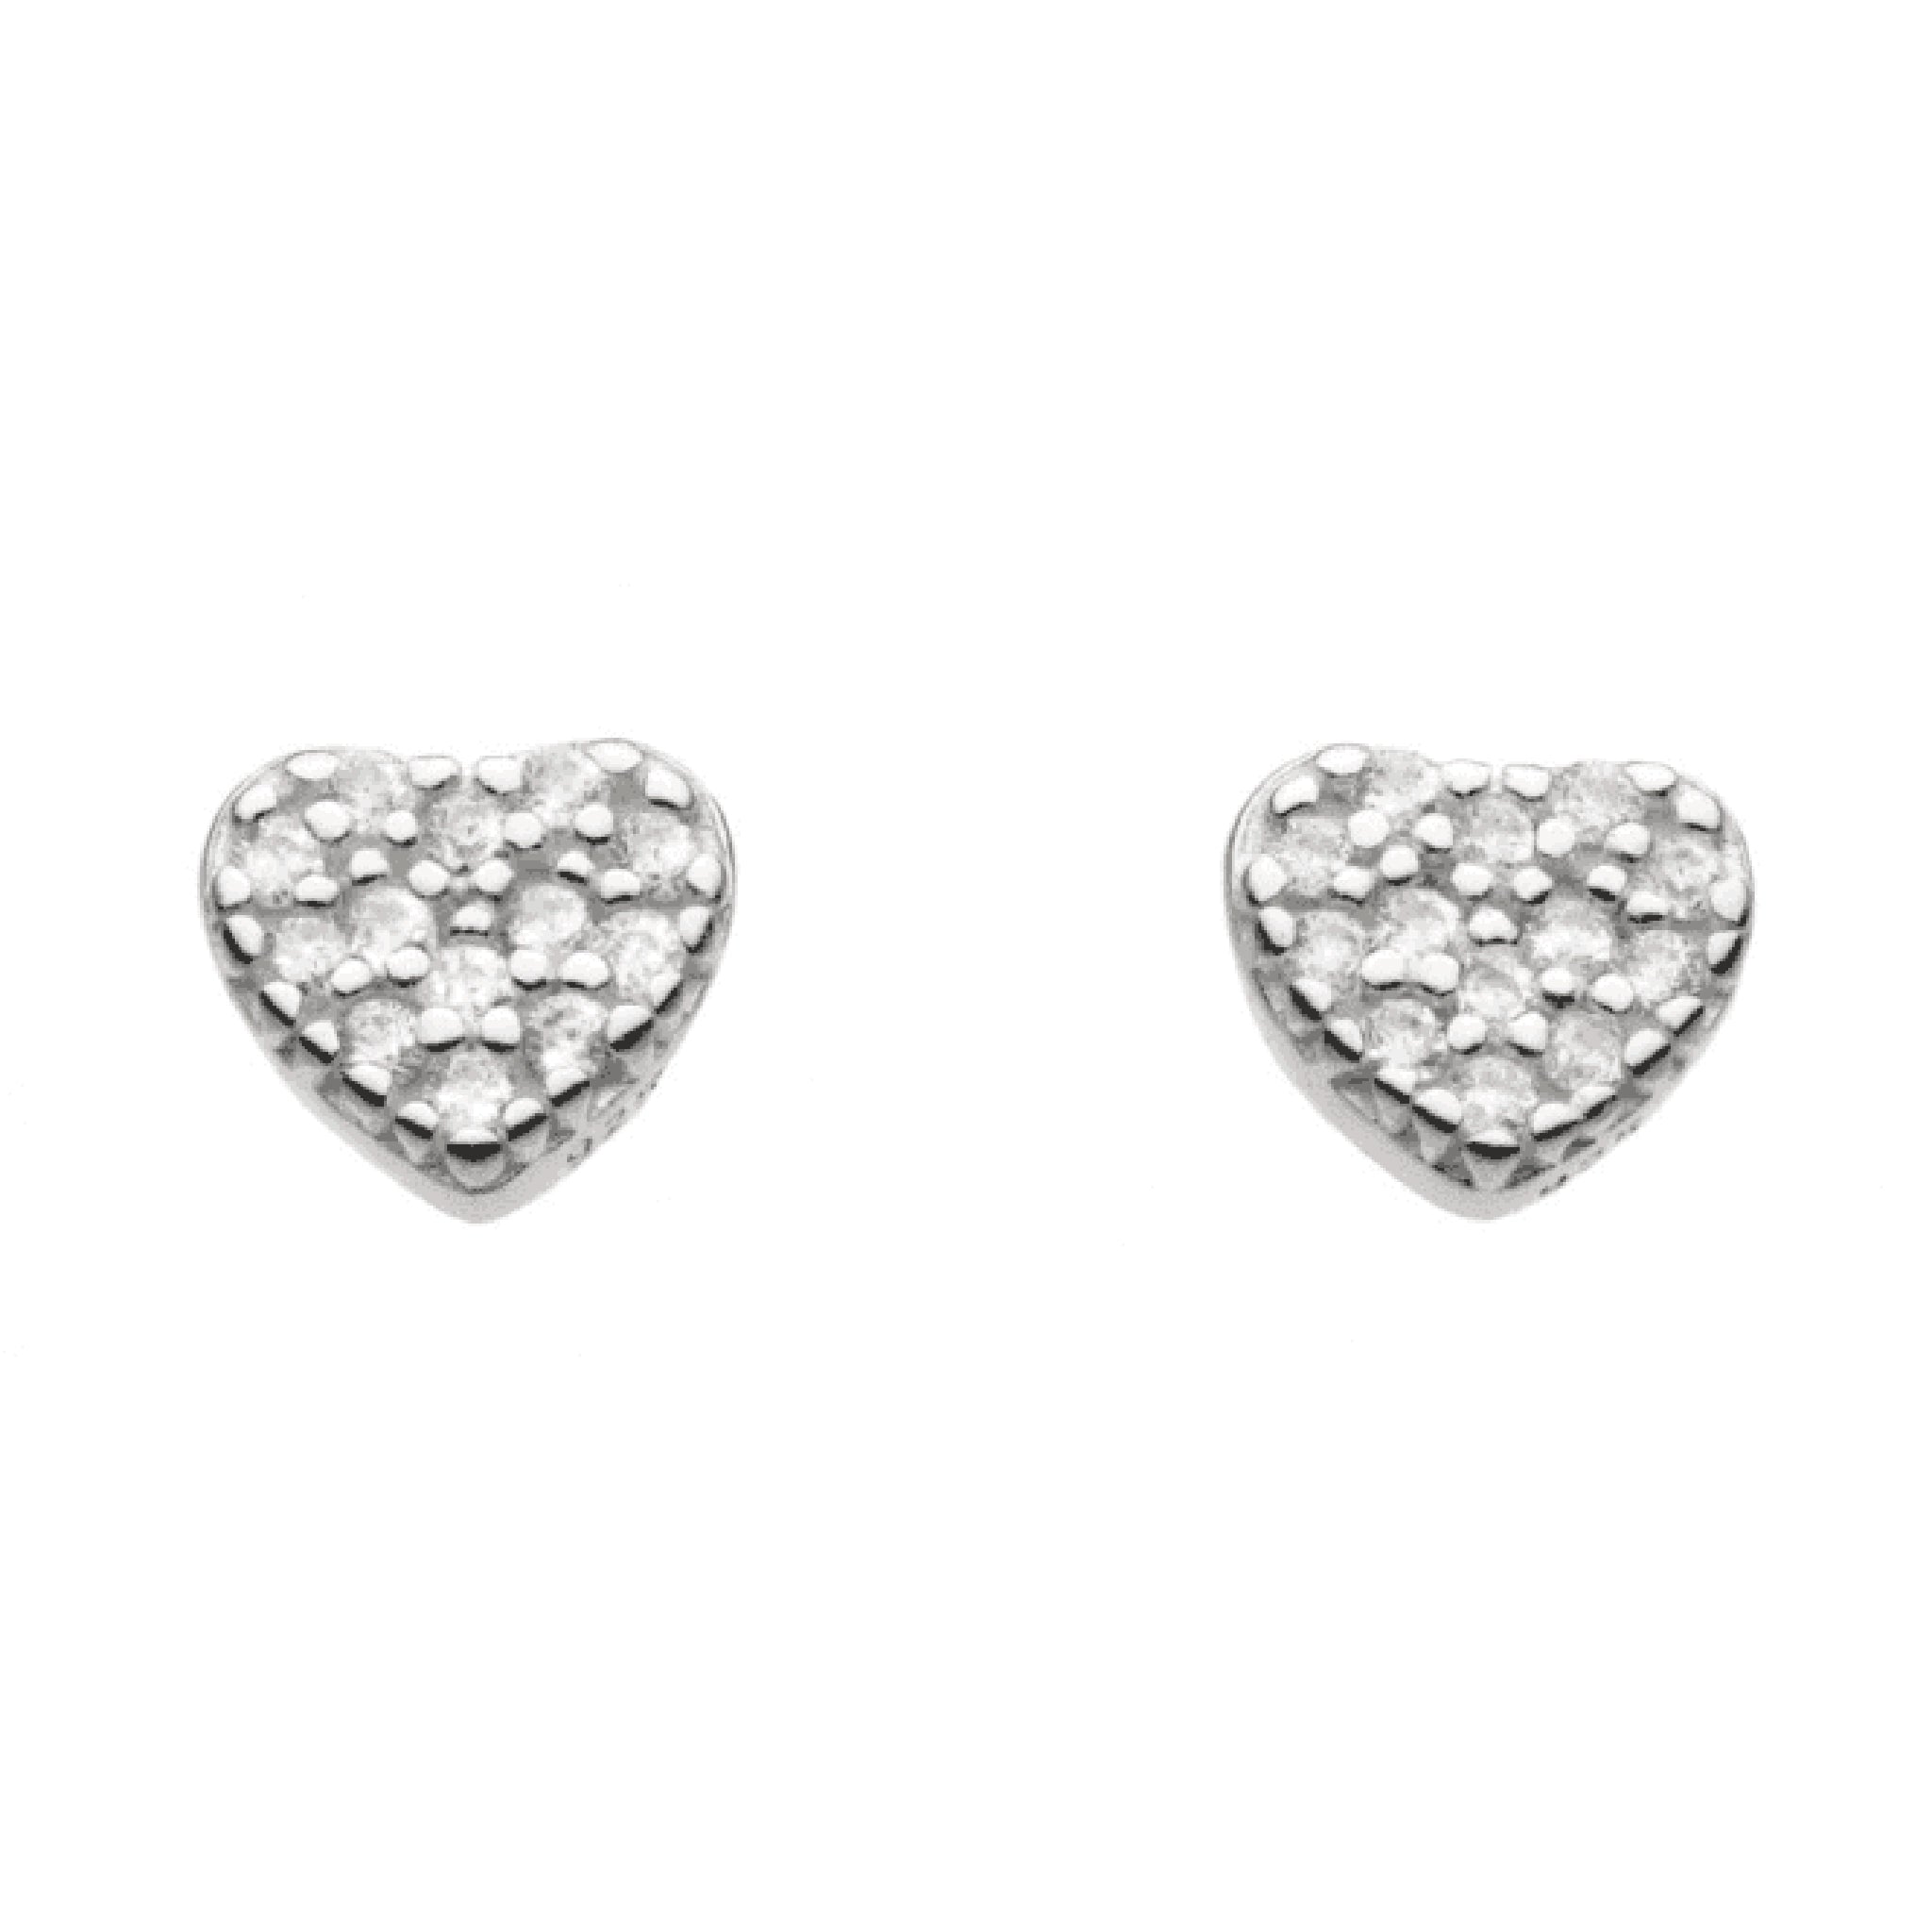 A pair of CZ set silver heart stud earrings